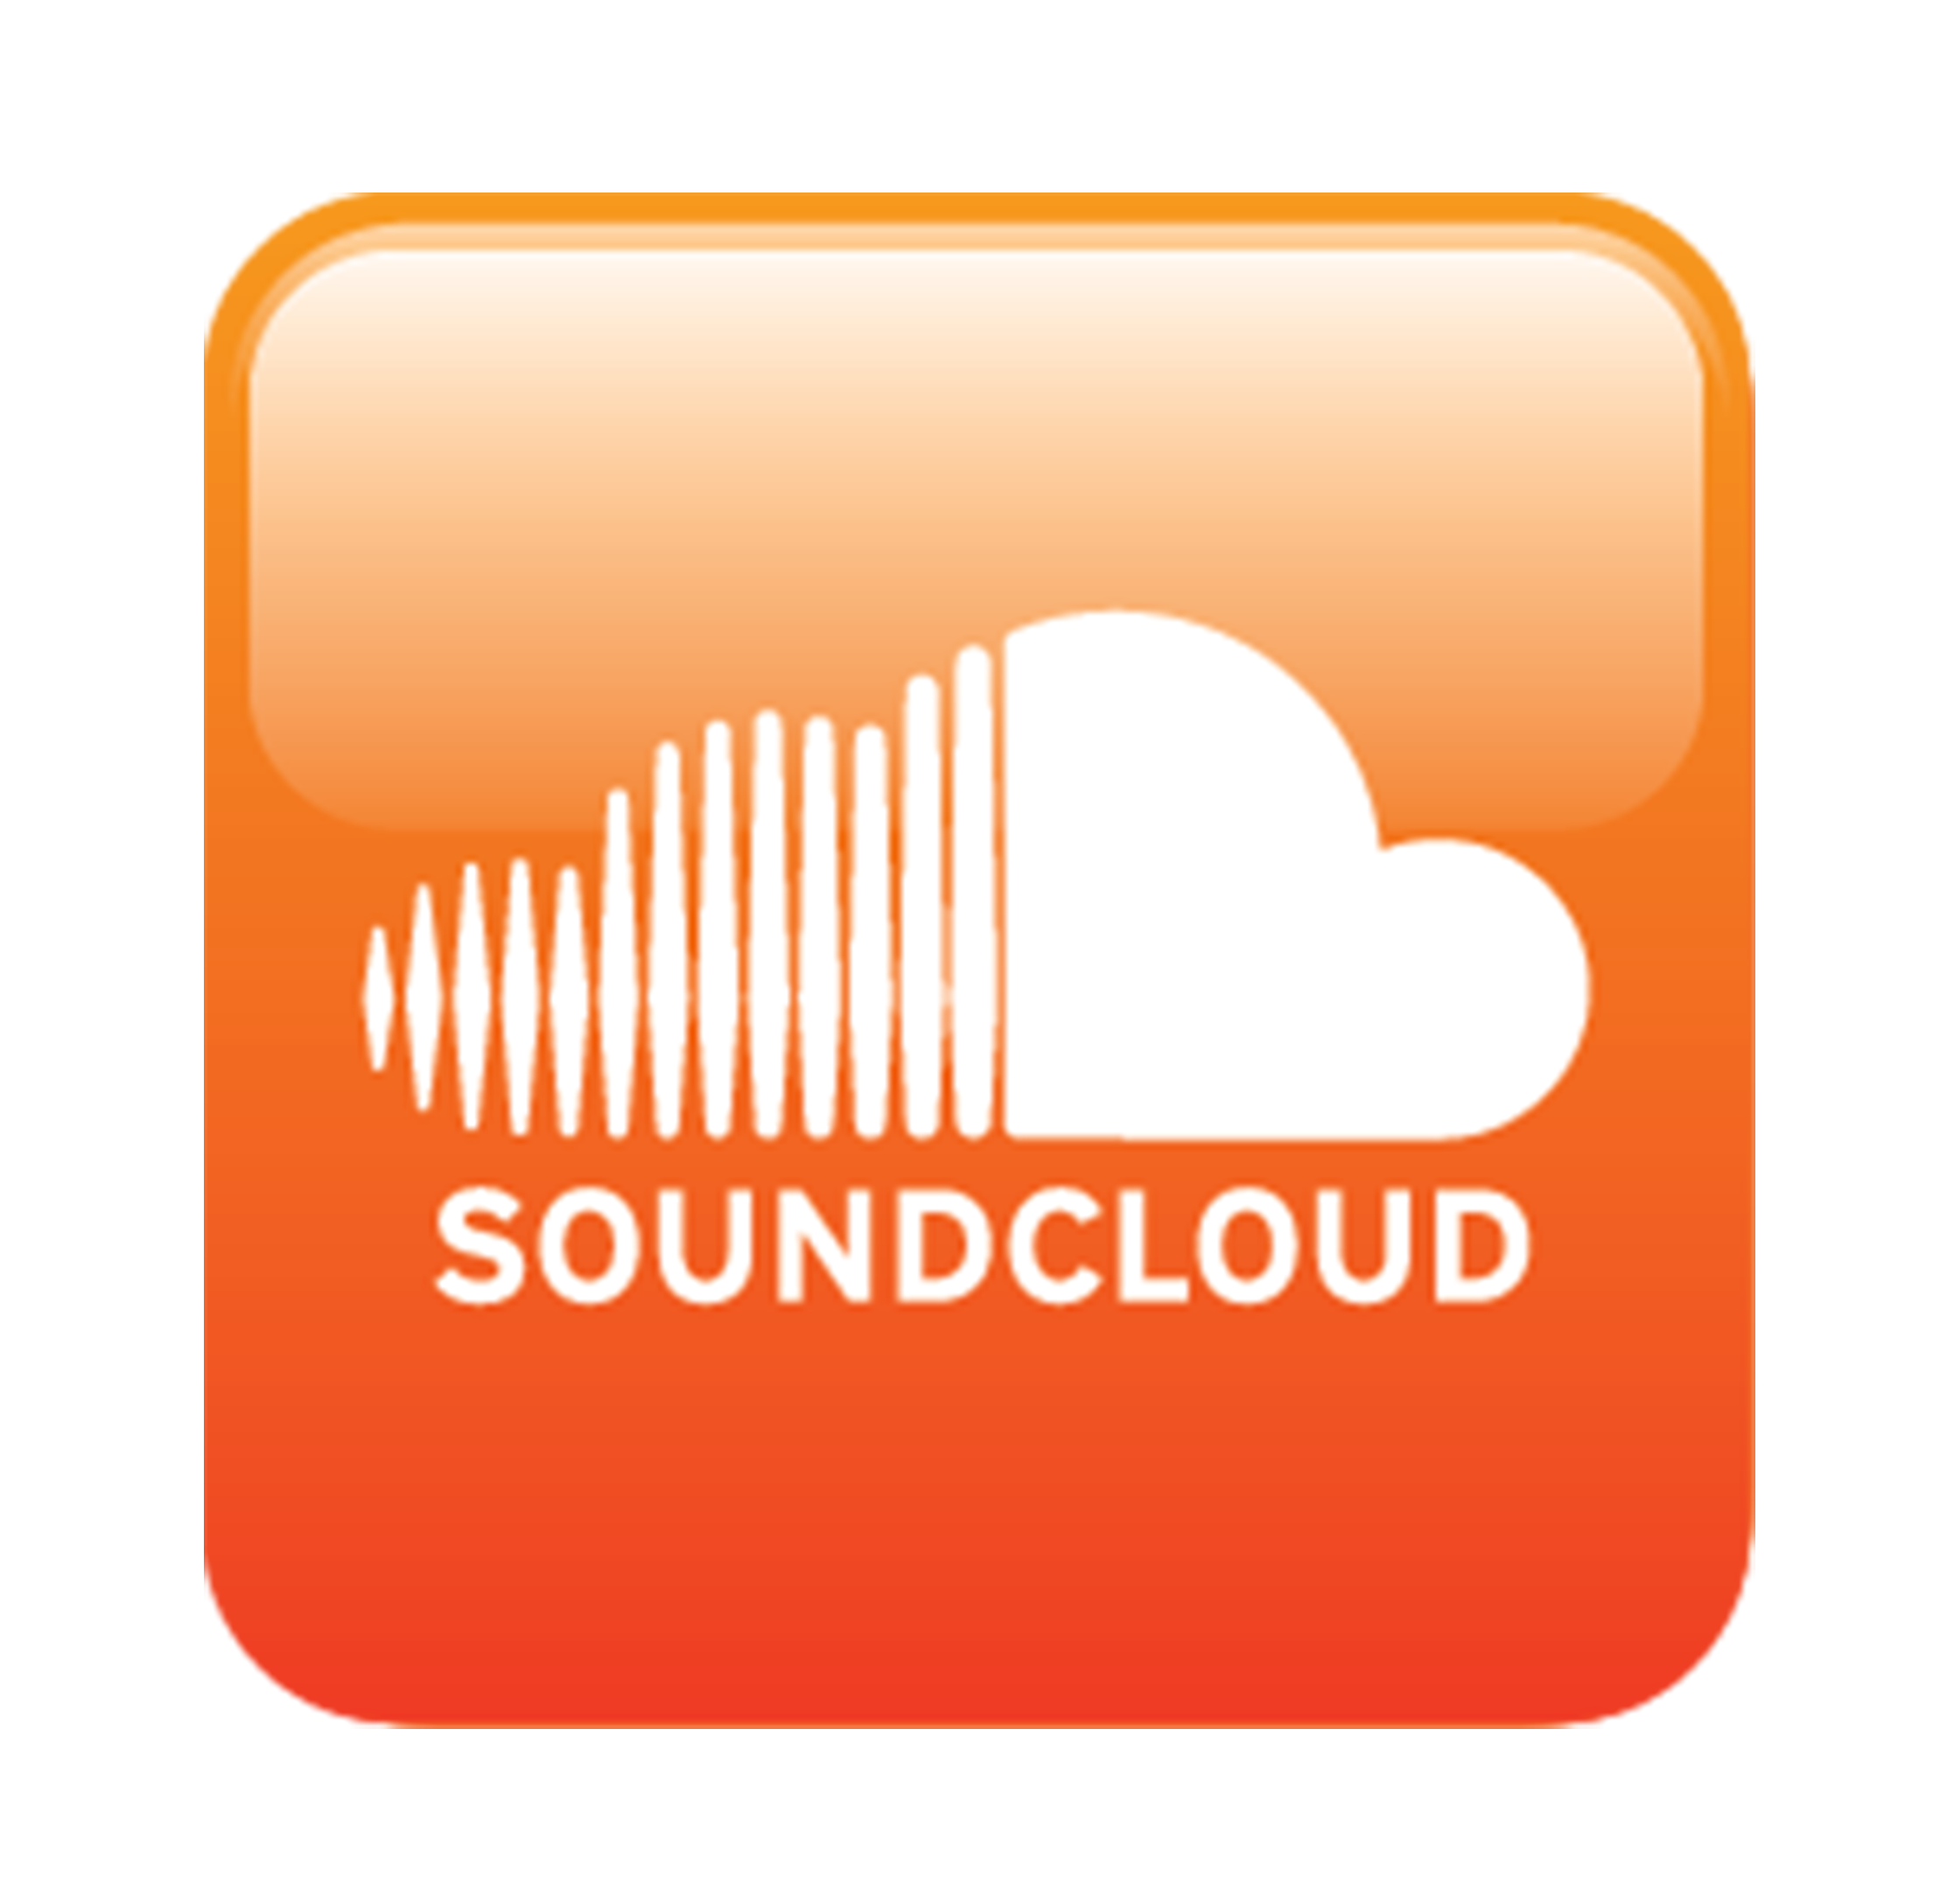 Follow on Soundcloud